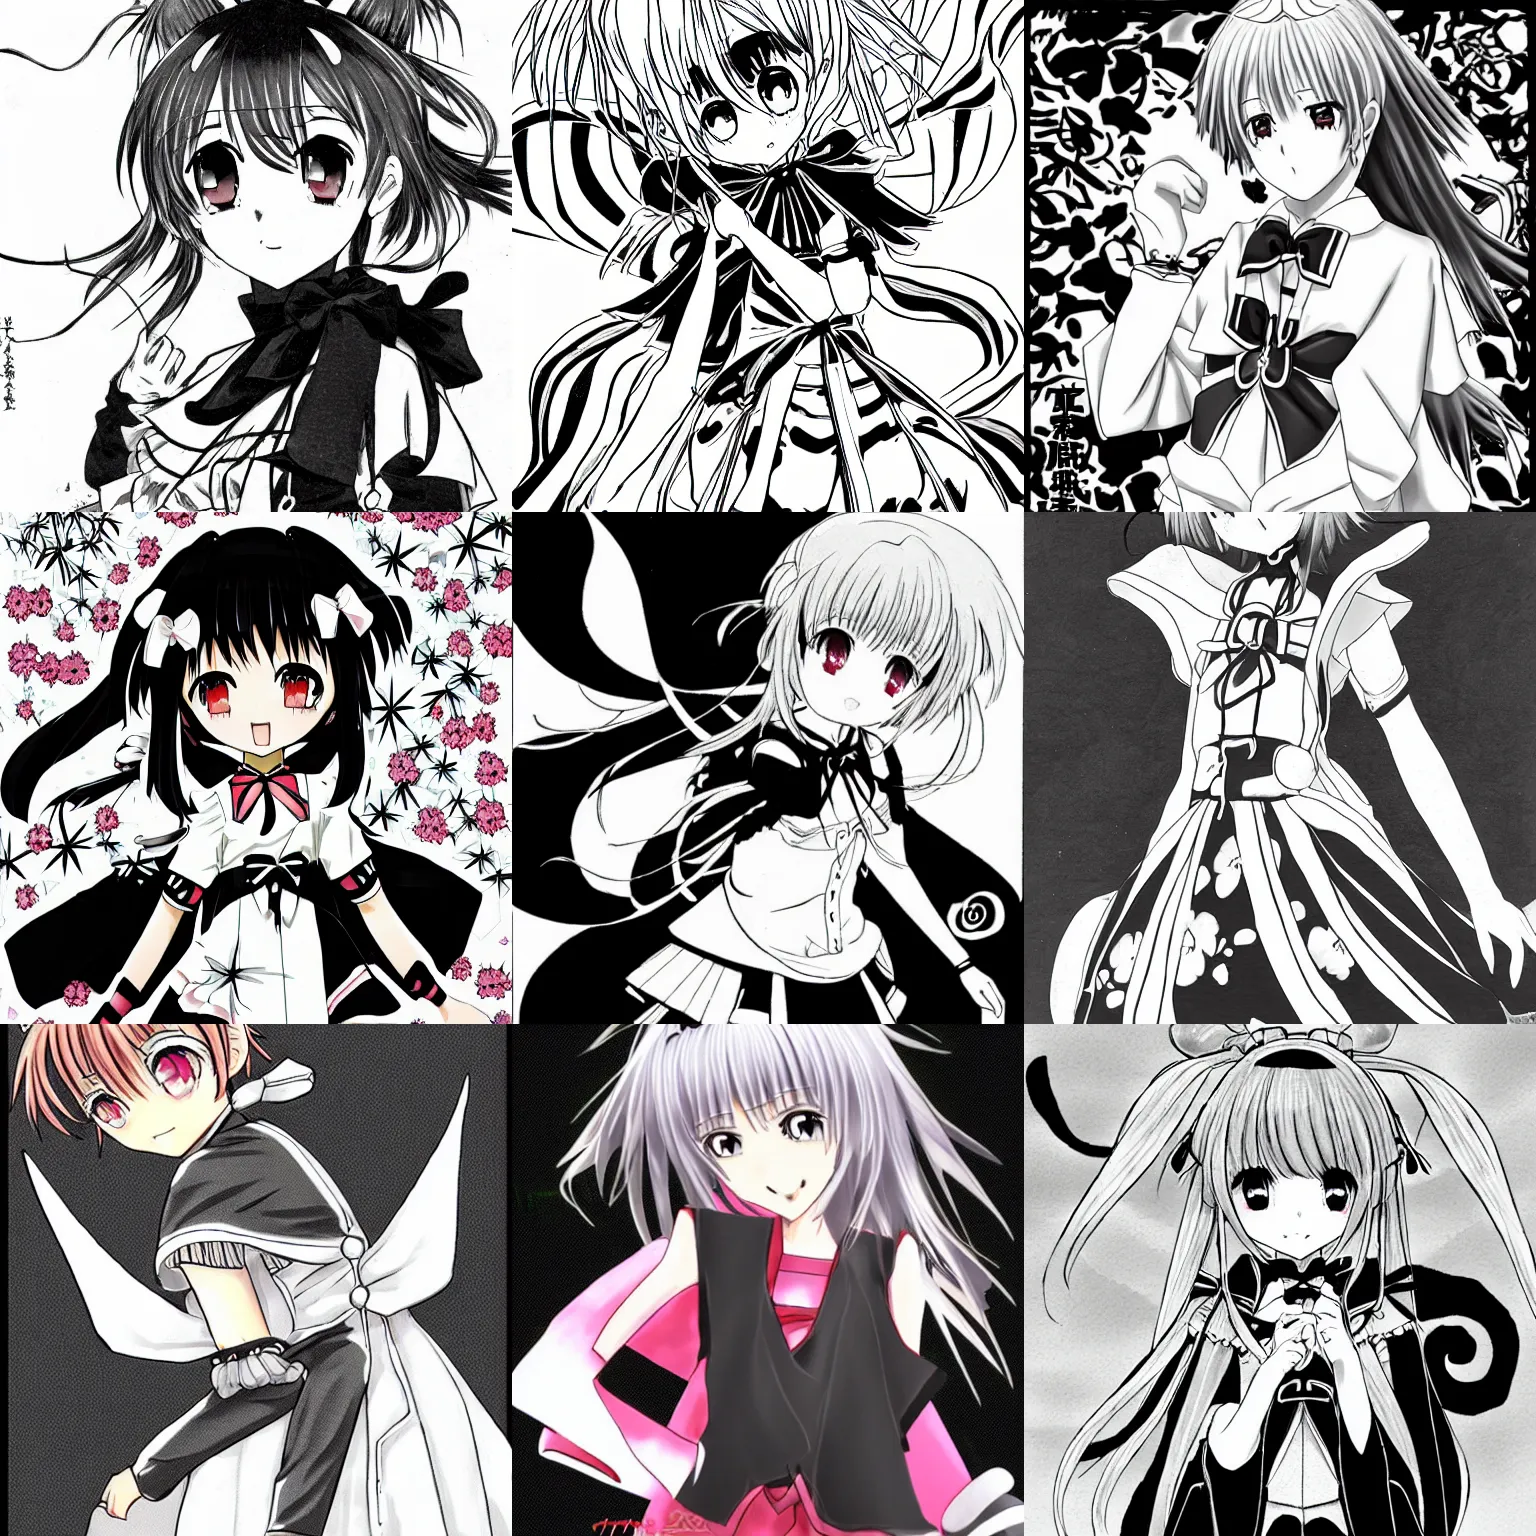 Prompt: sakura kinomoto, mysterious x, tsubasa chronicles, manga, clamp style, black and white, riichi ueshiba